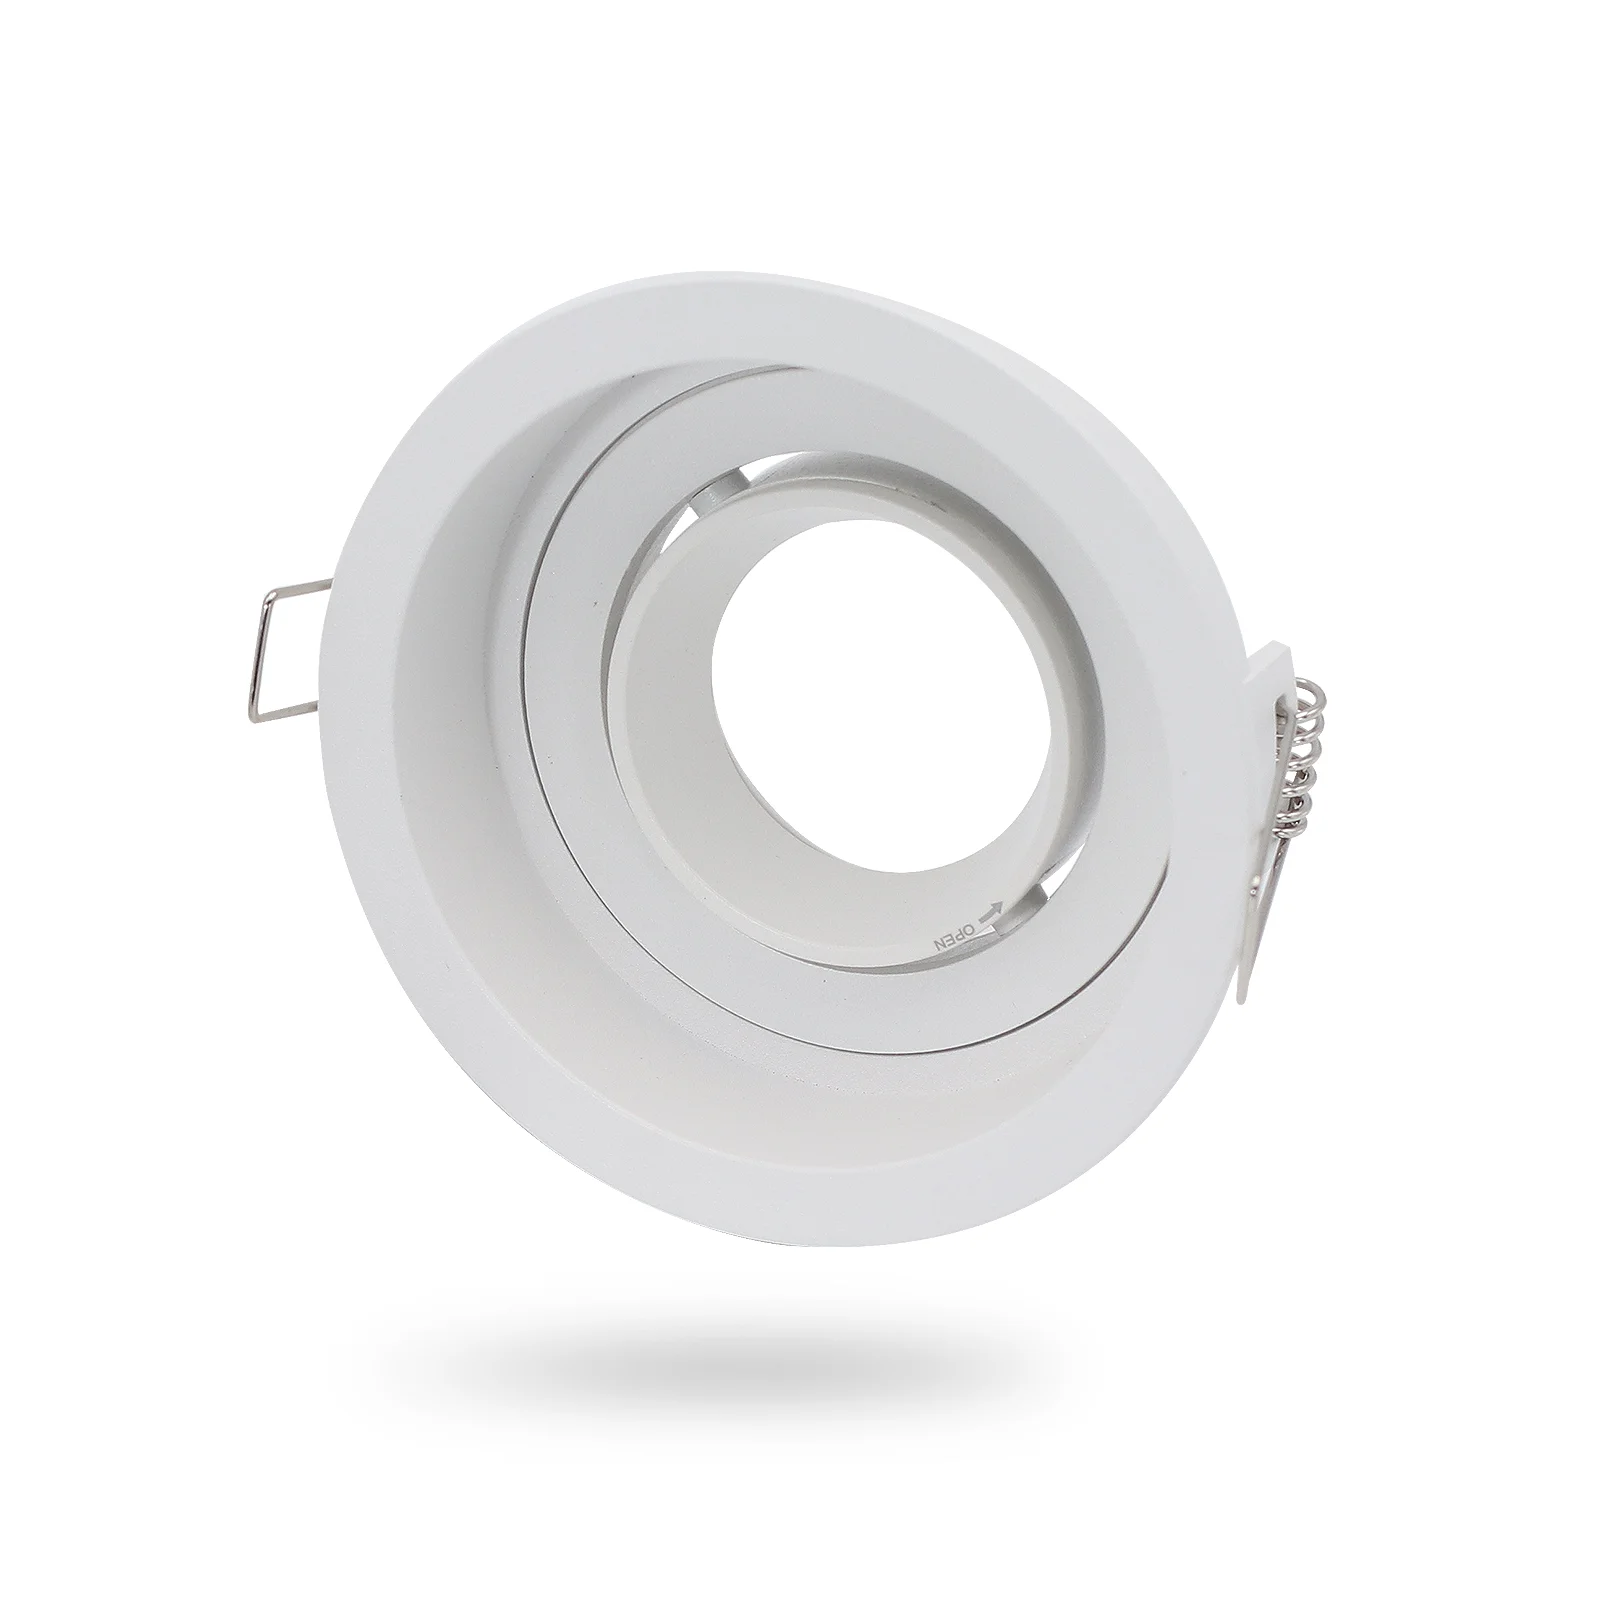 White/Black Led Ceiling Spotlight Bulbs Fixture Lampholder Recessed Lamp... - $184.92